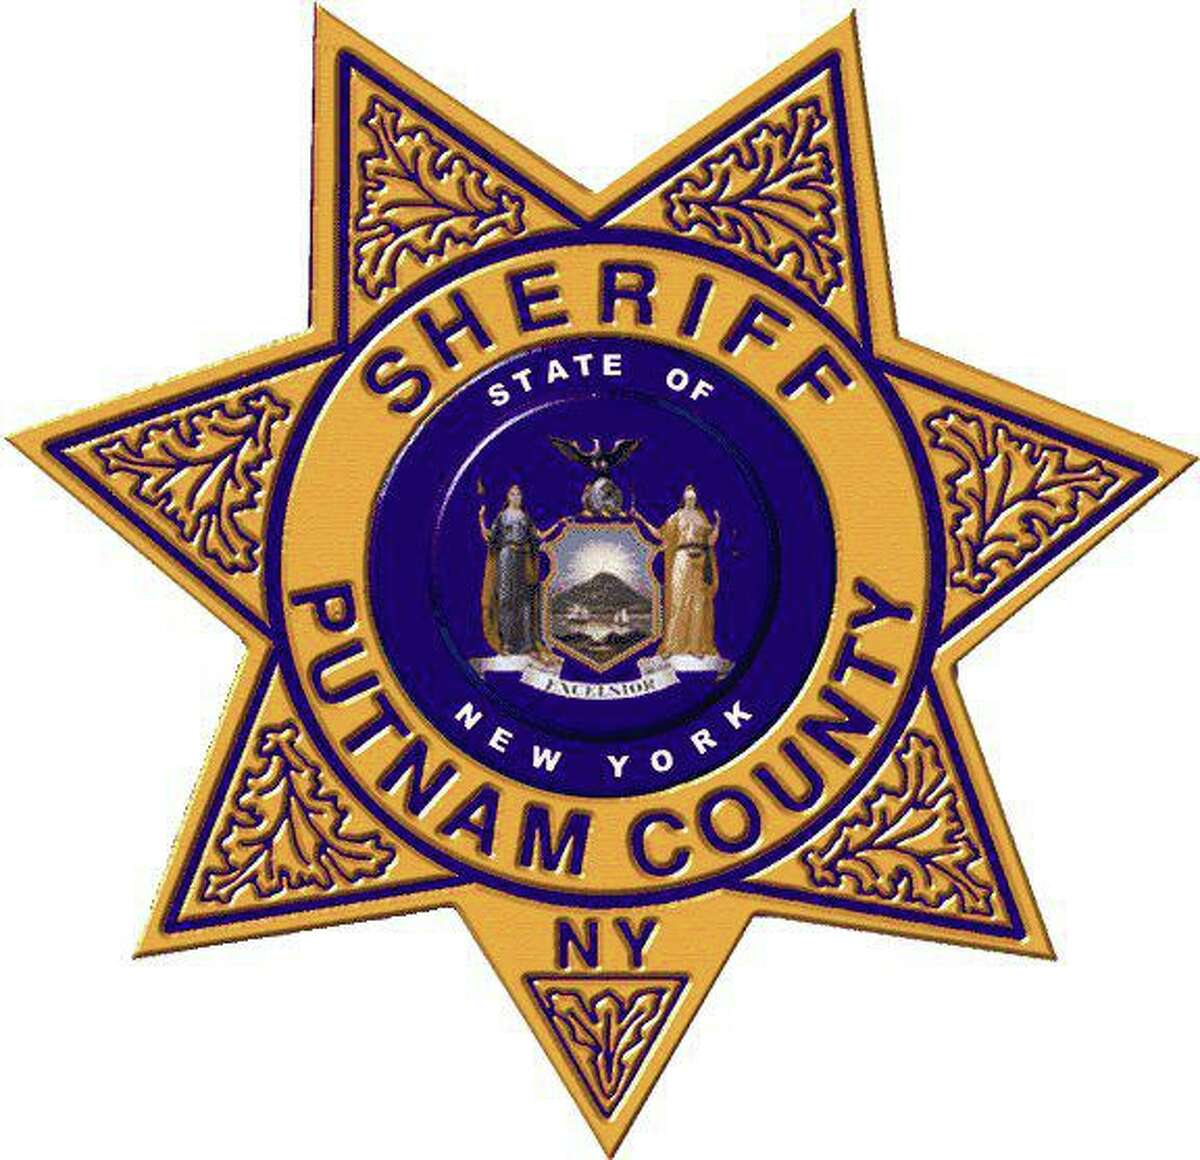 Police: Danbury men caught with cocaine in New York